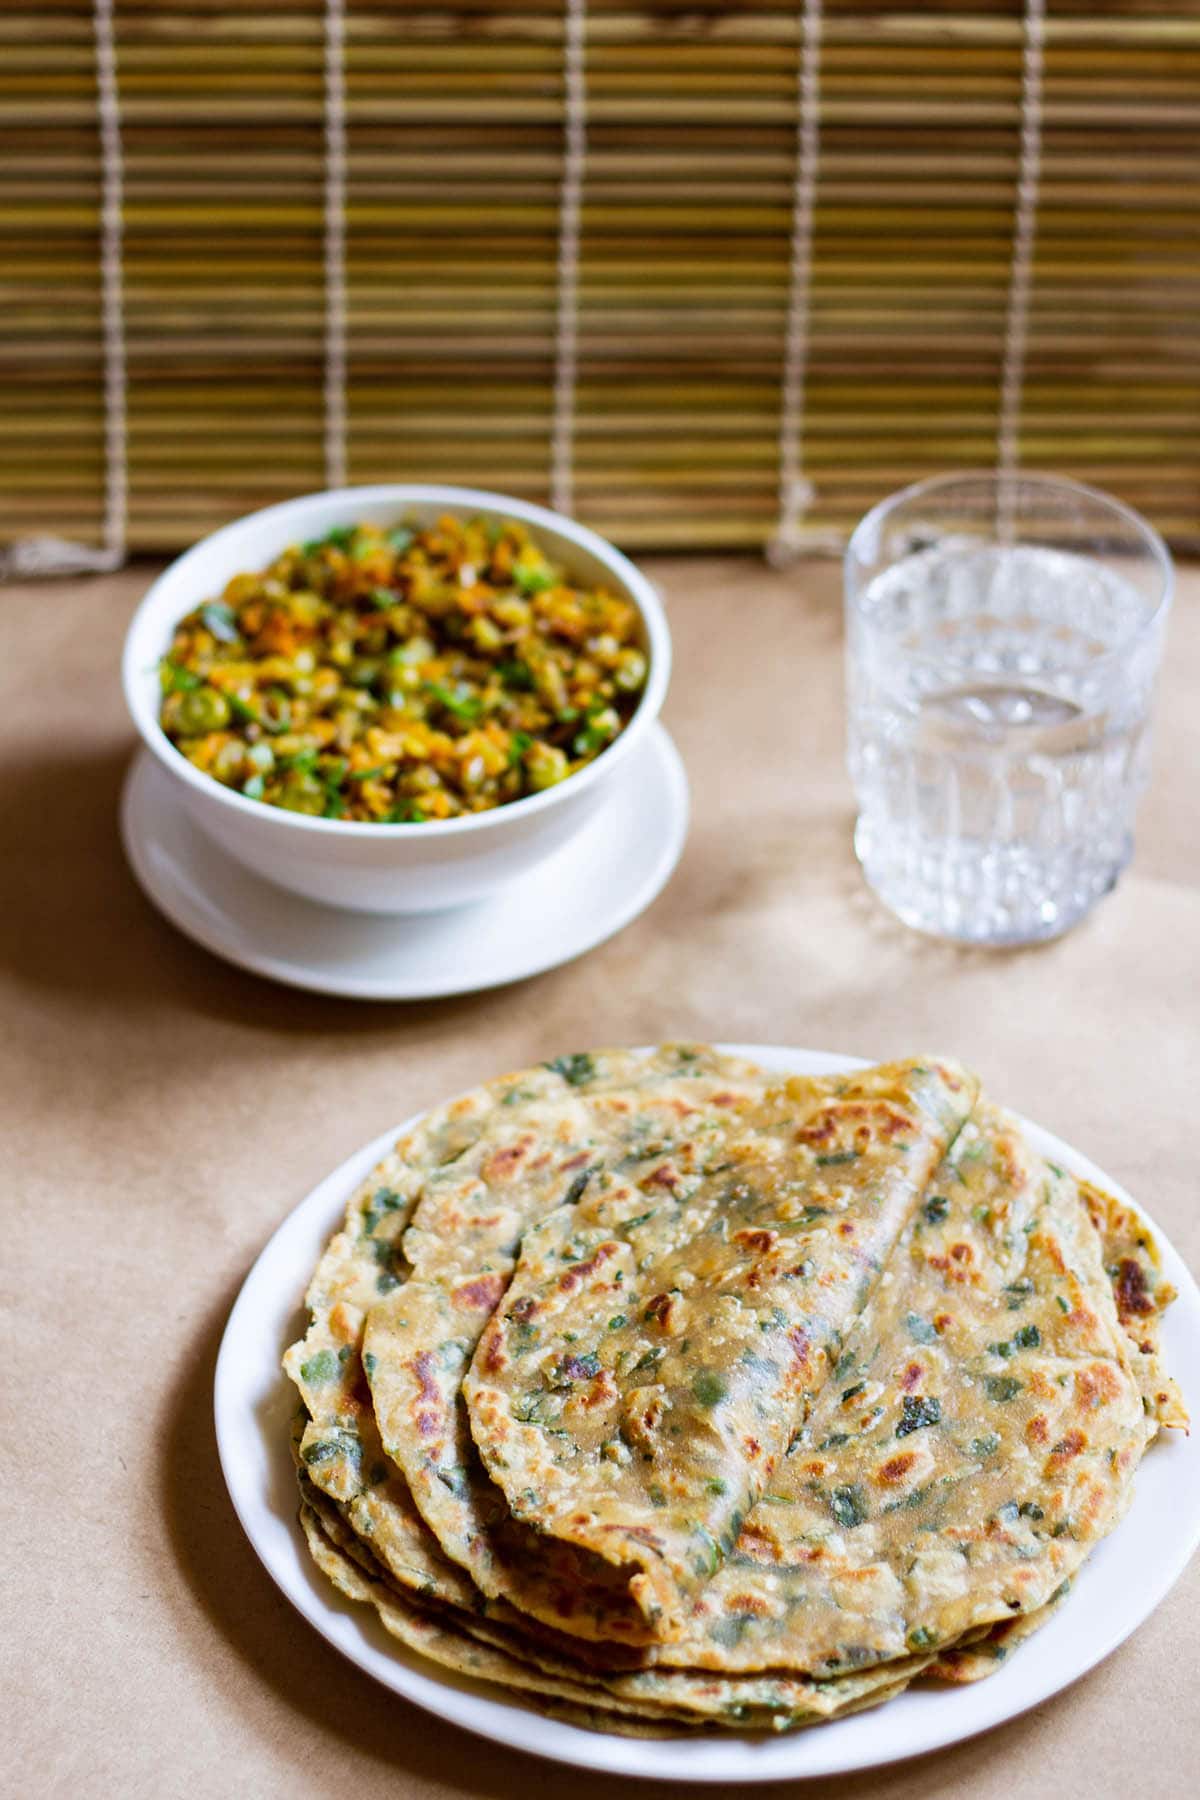 methi paratha dilipat pada timbunan methi paratha dalam pinggan putih dengan hidangan sayuran dalam mangkuk putih dan segelas air